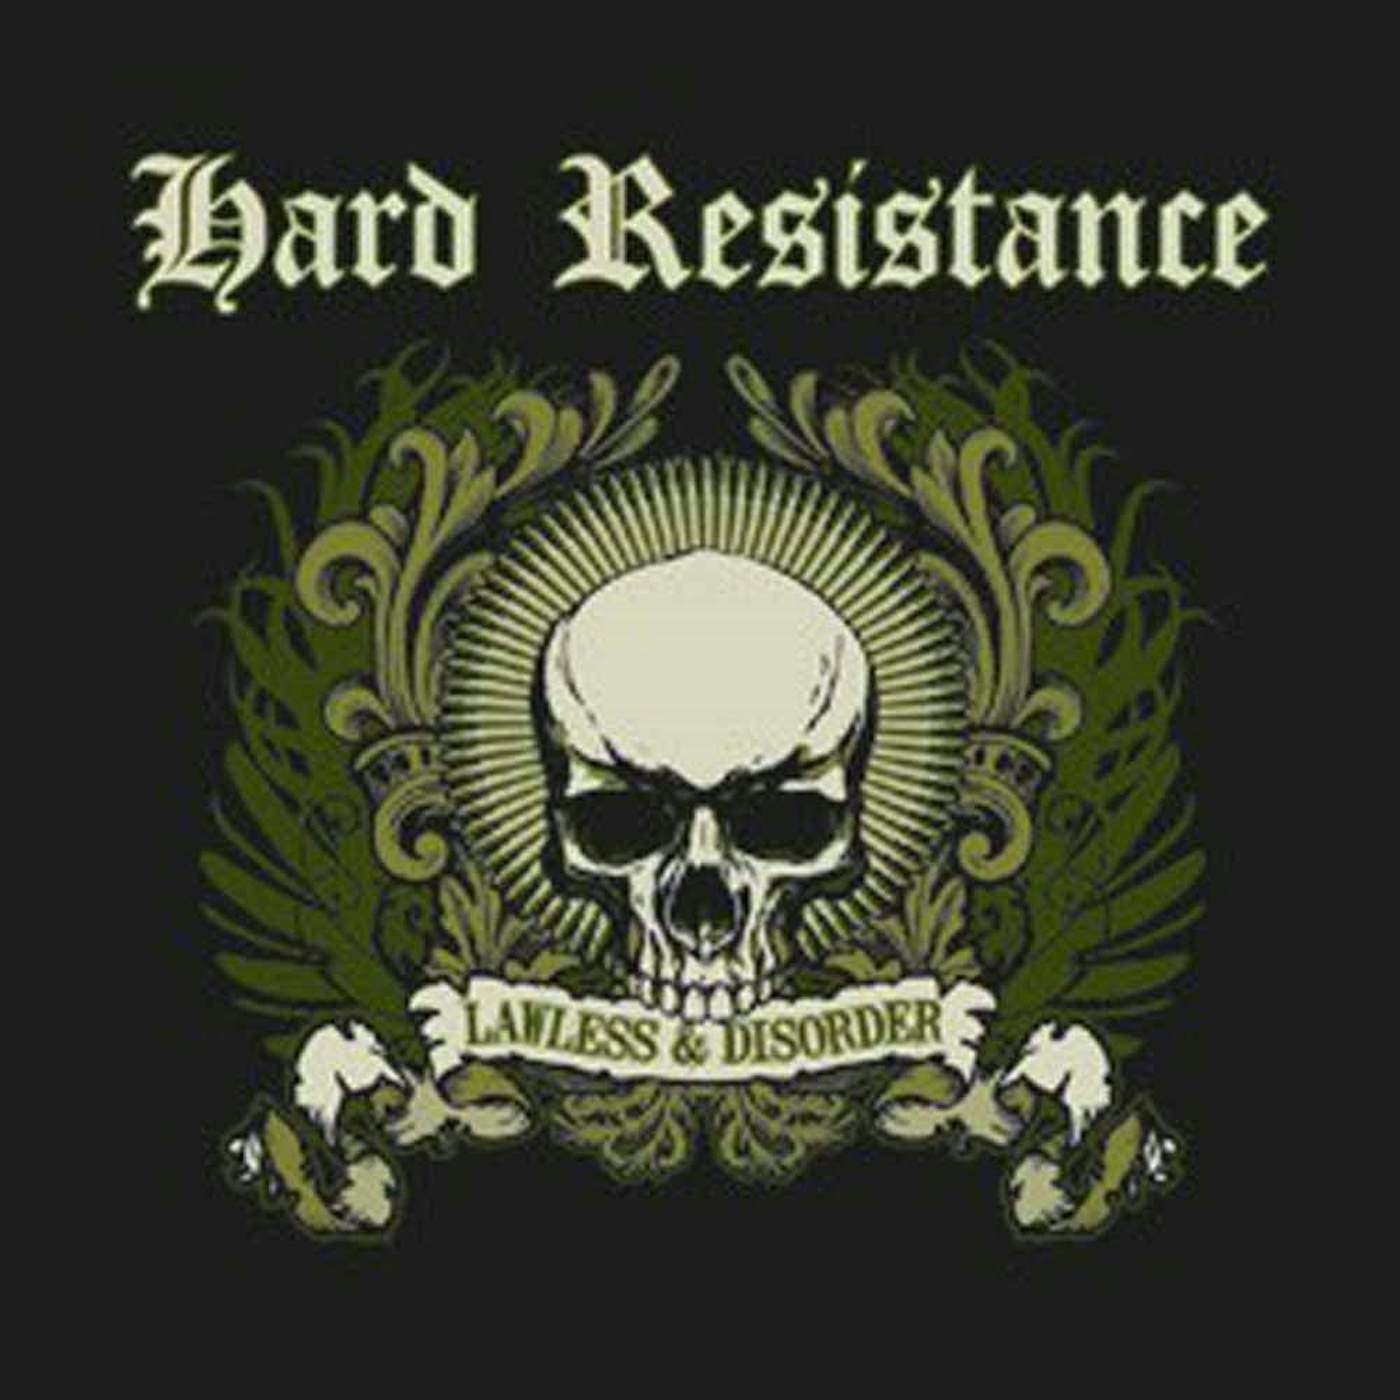 Hard Resistance LP - Lawless & Disorder (Vinyl)